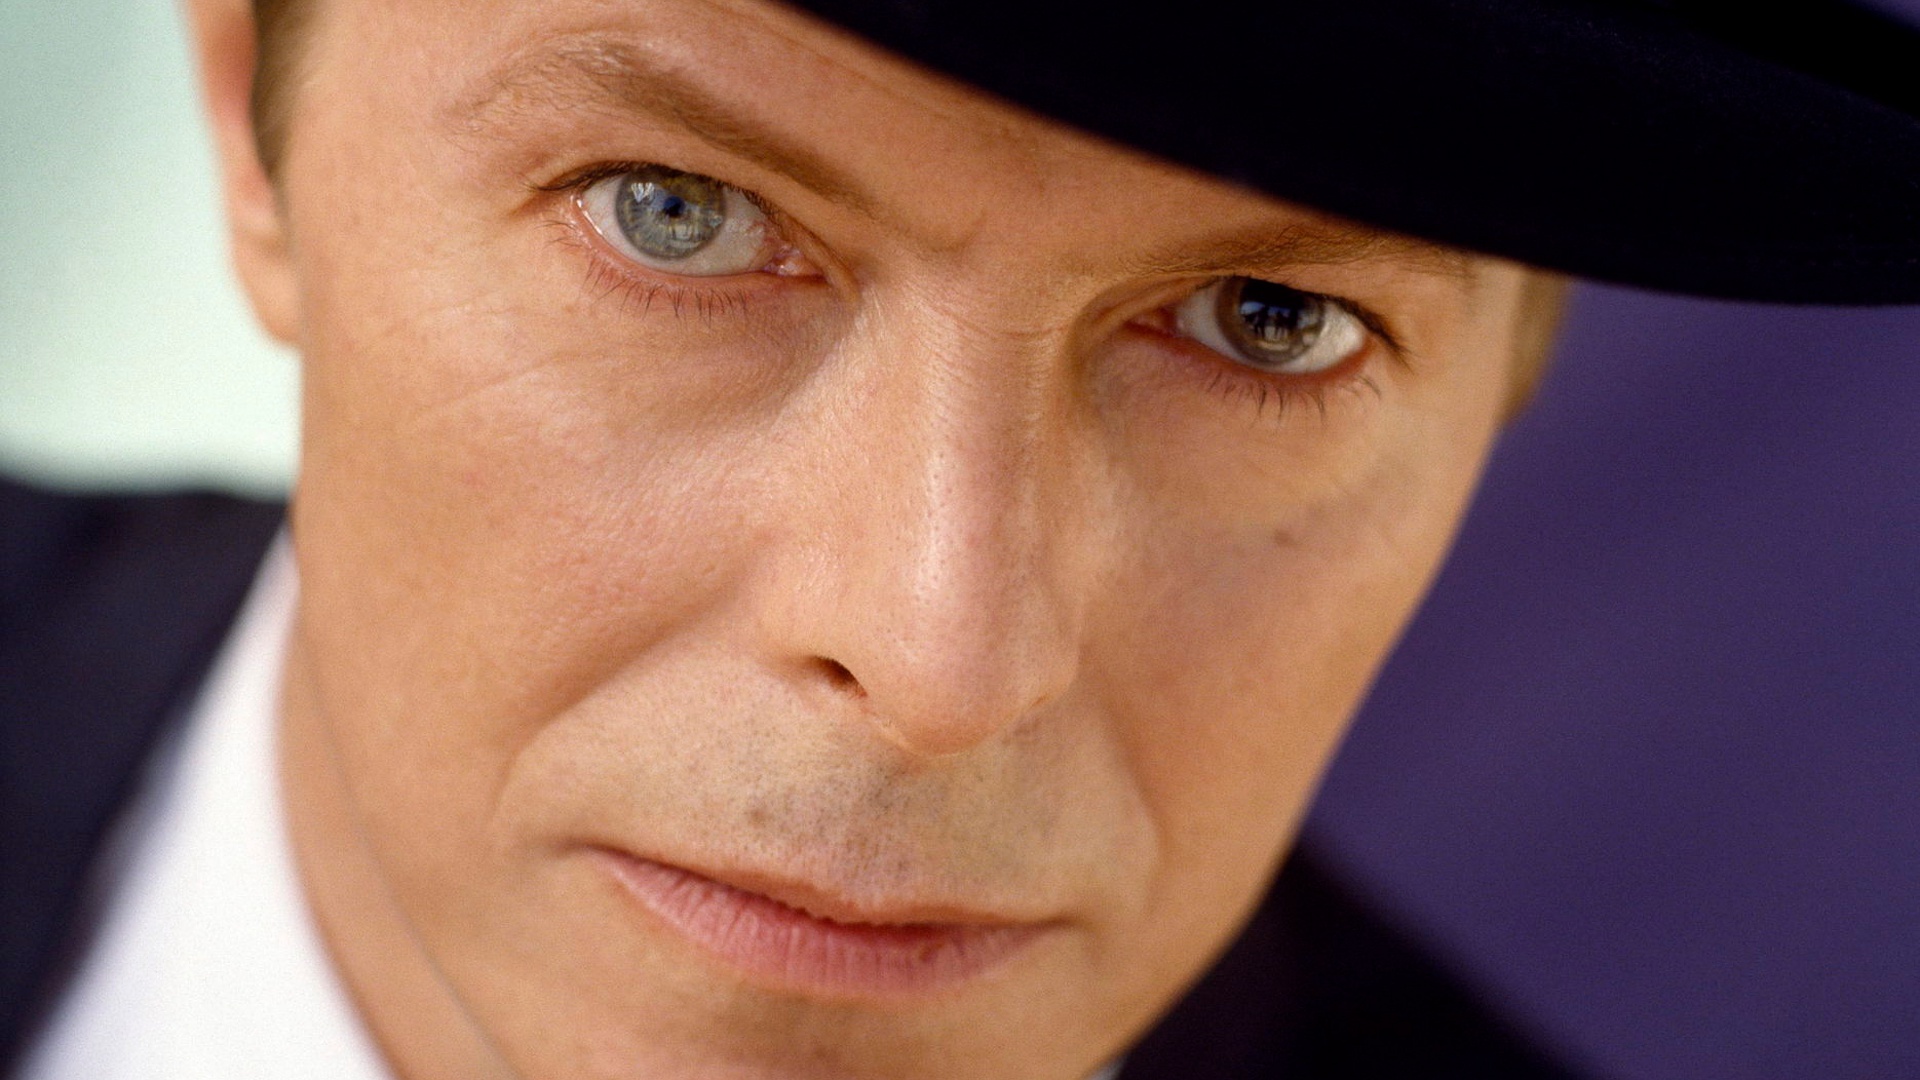 Free download wallpaper Music, David Bowie on your PC desktop